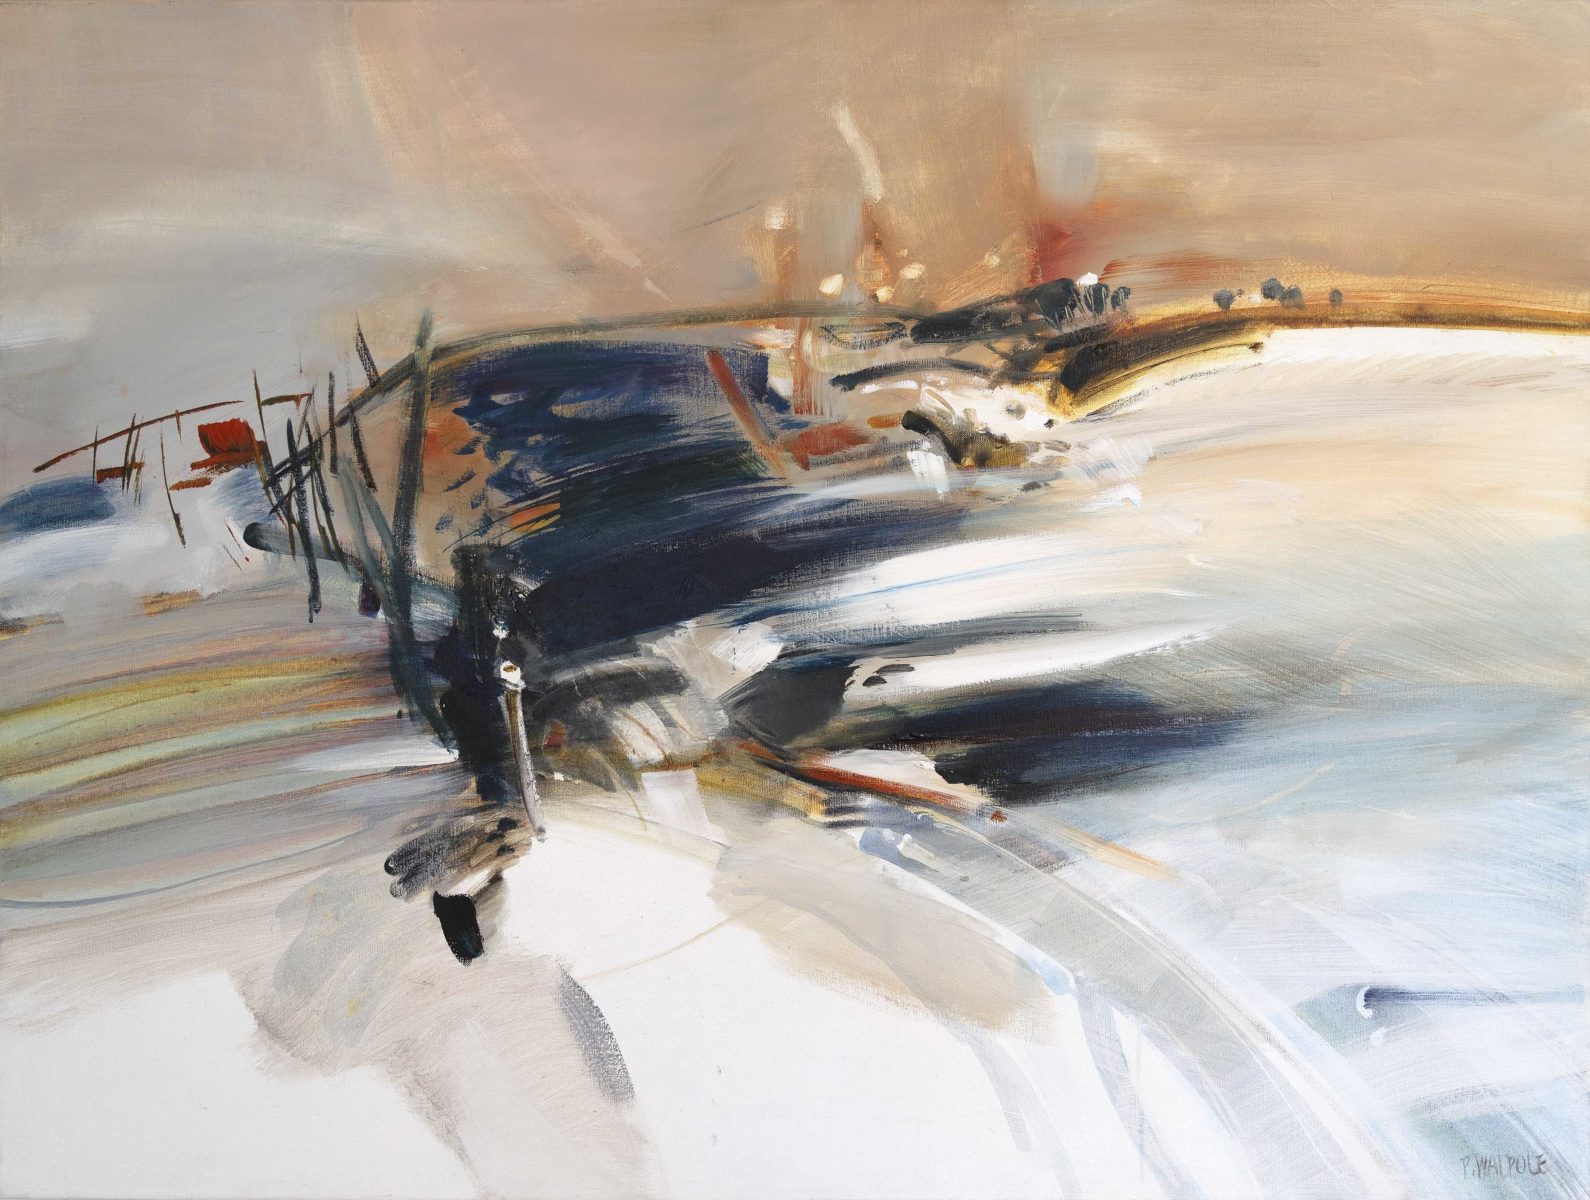 Dust Storm Over Broken Gully 2021 | Pam Walpole | Mixed media on canvas | 92 x 122 cm | $3900